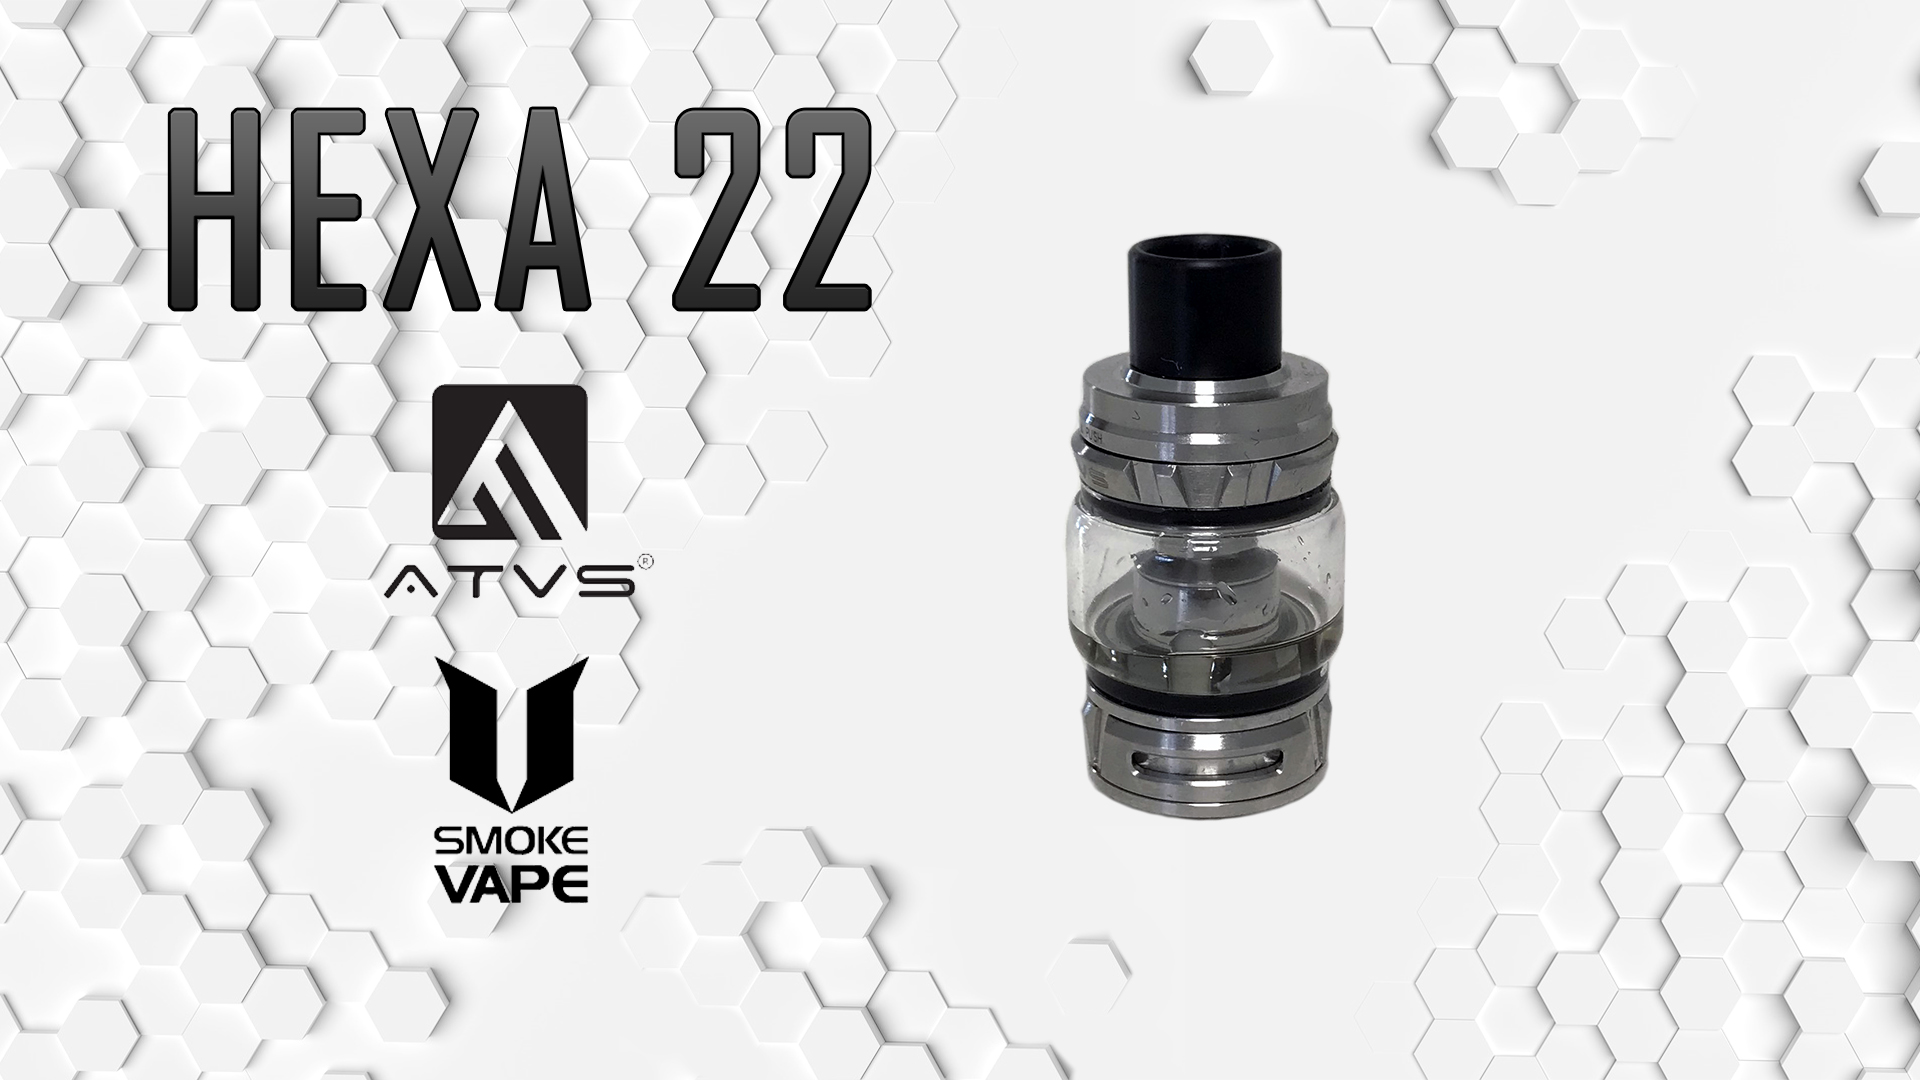 hexa 22 atvs smoke vape